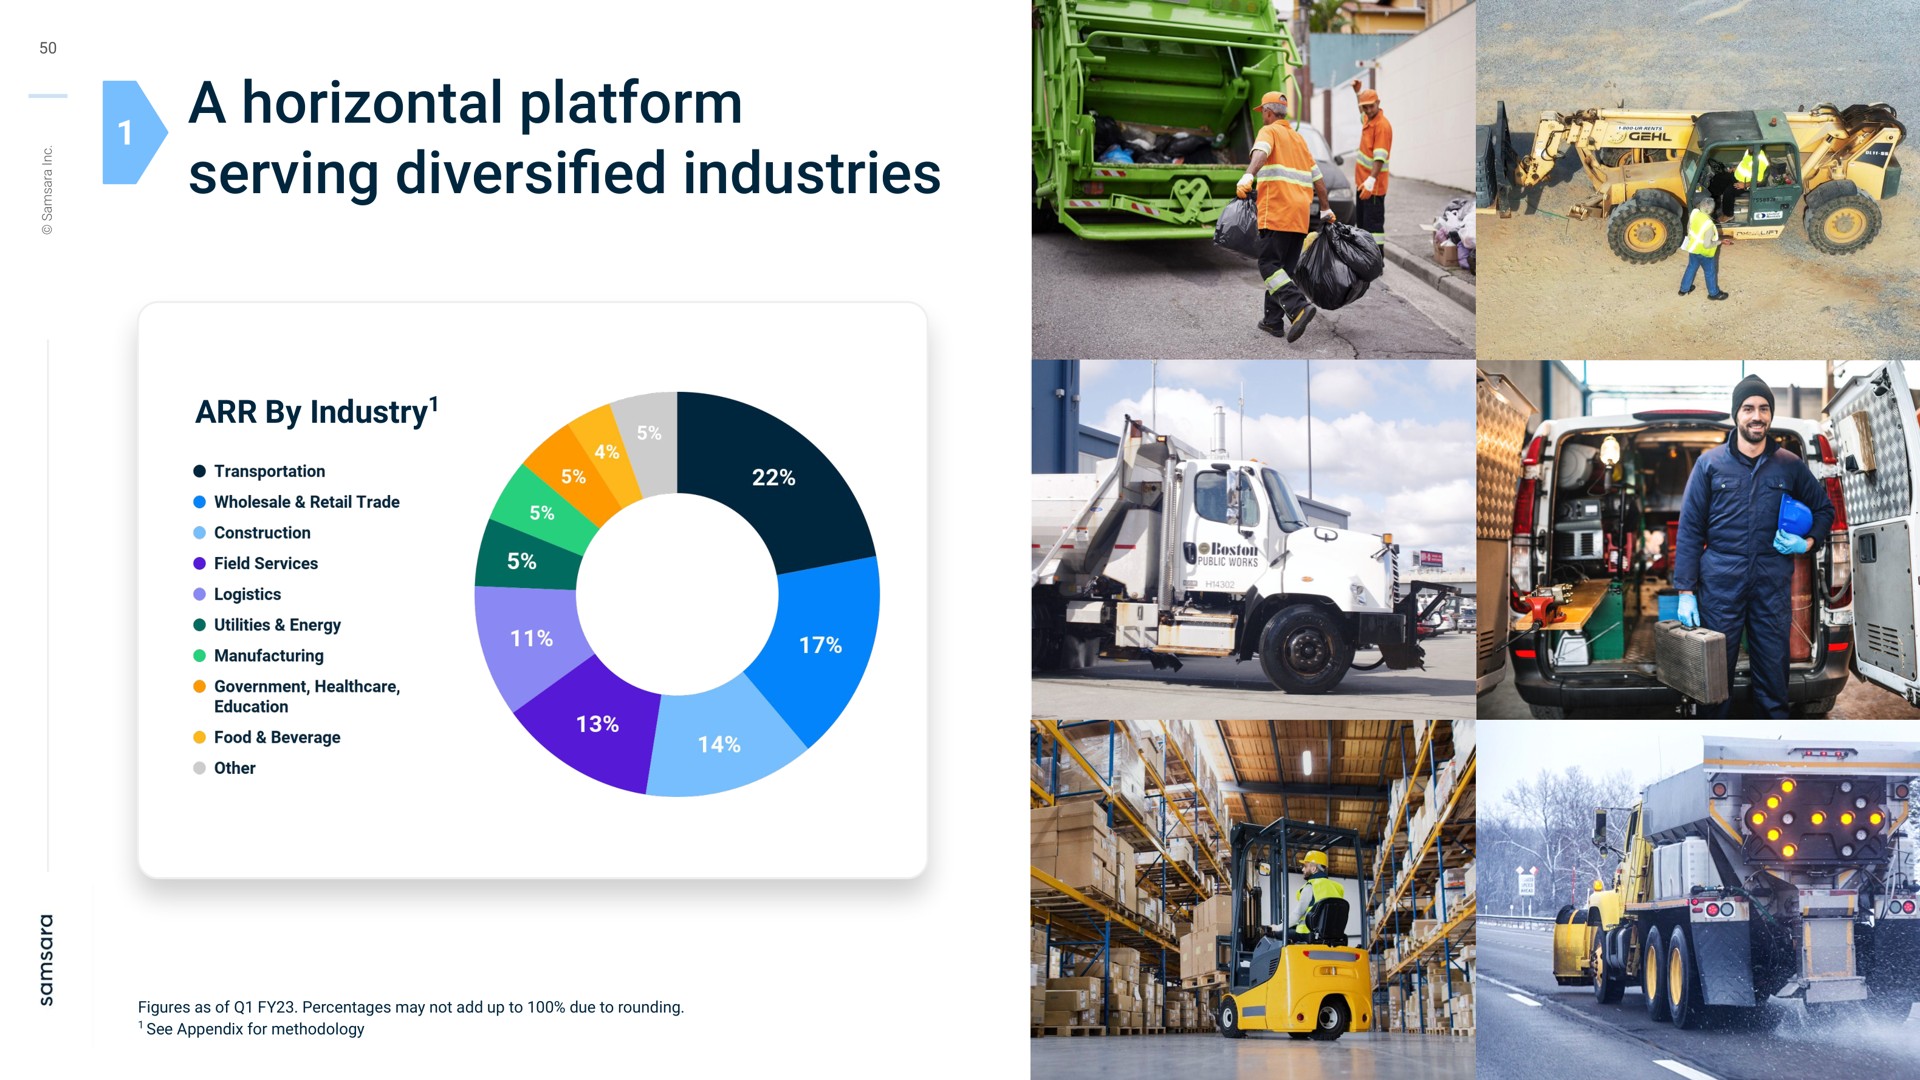 a horizontal platform serving industries by industry diversified | Samsara